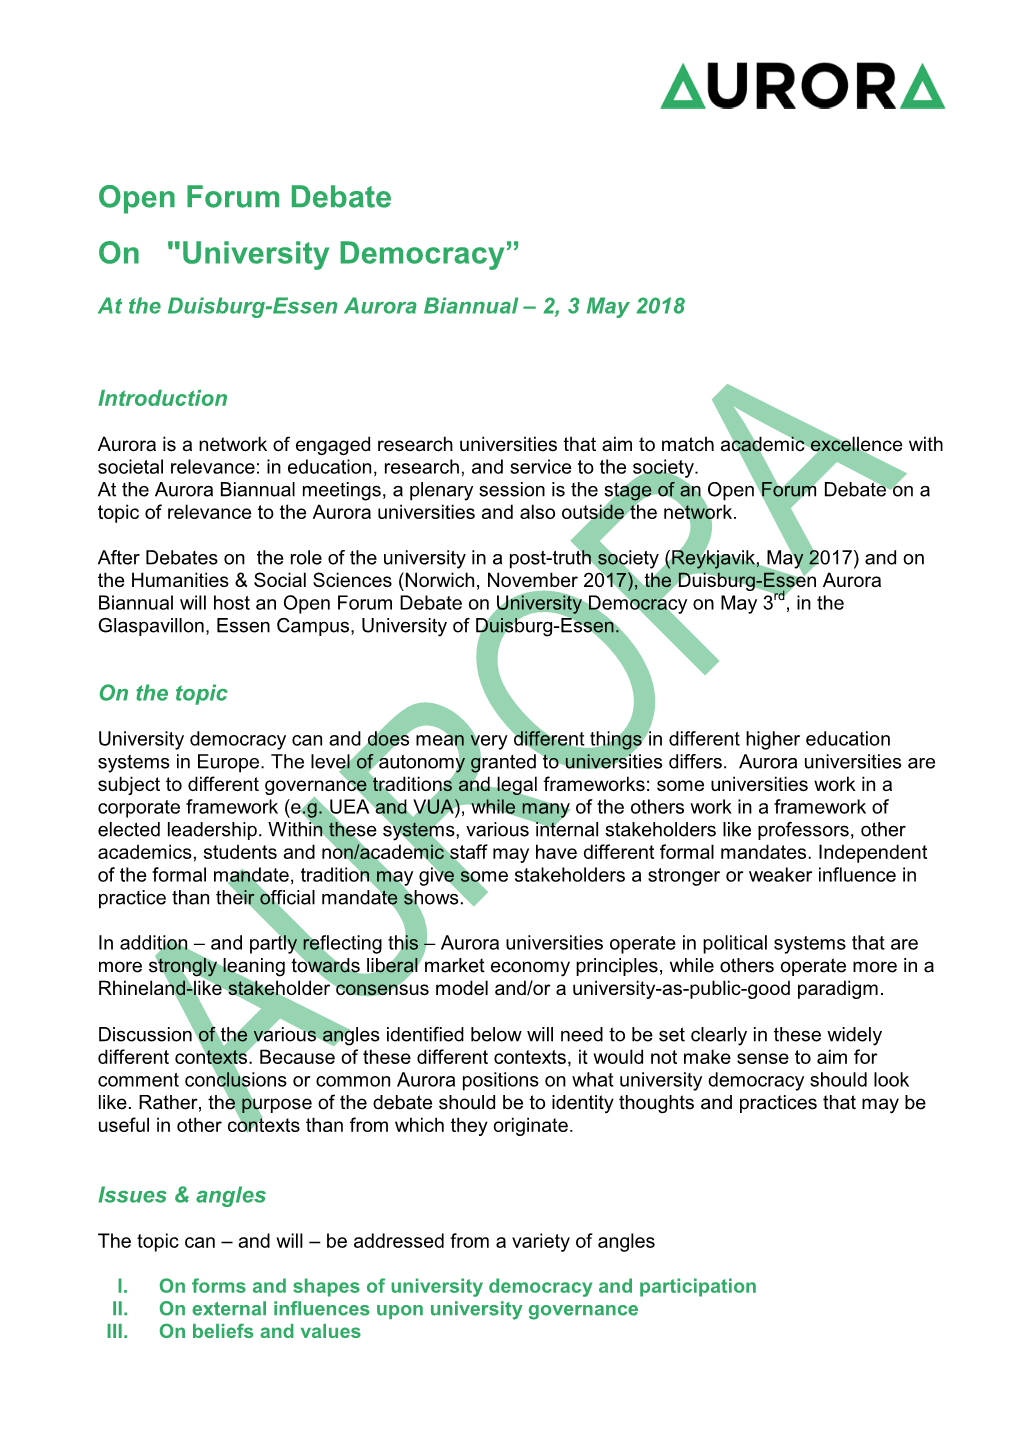 Open Forum Debate on "University Democracy”